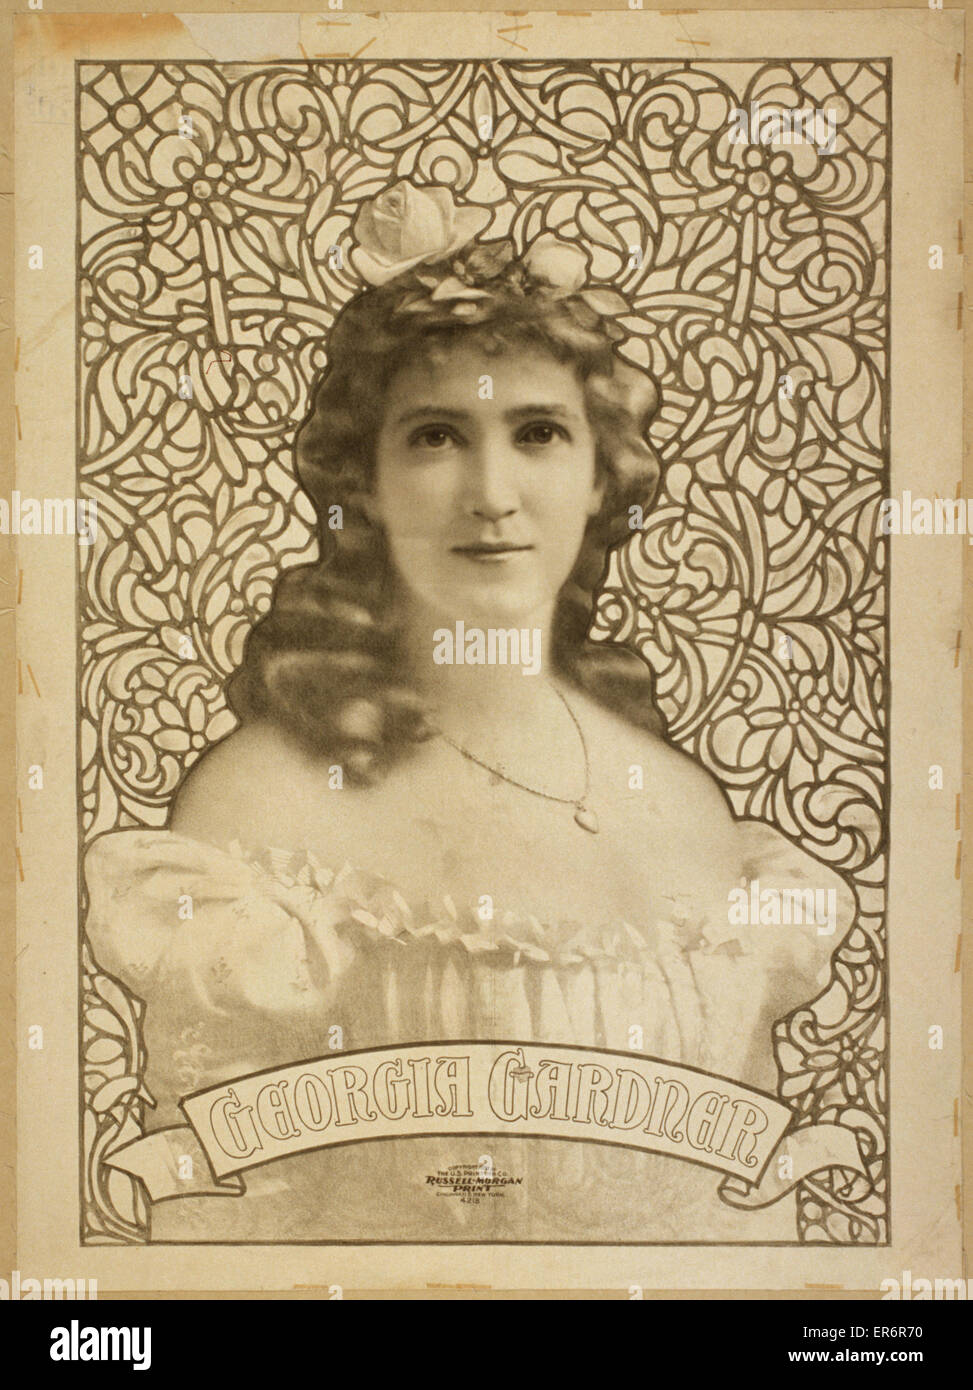 Georgia Gardner. Date c1899. Stock Photo